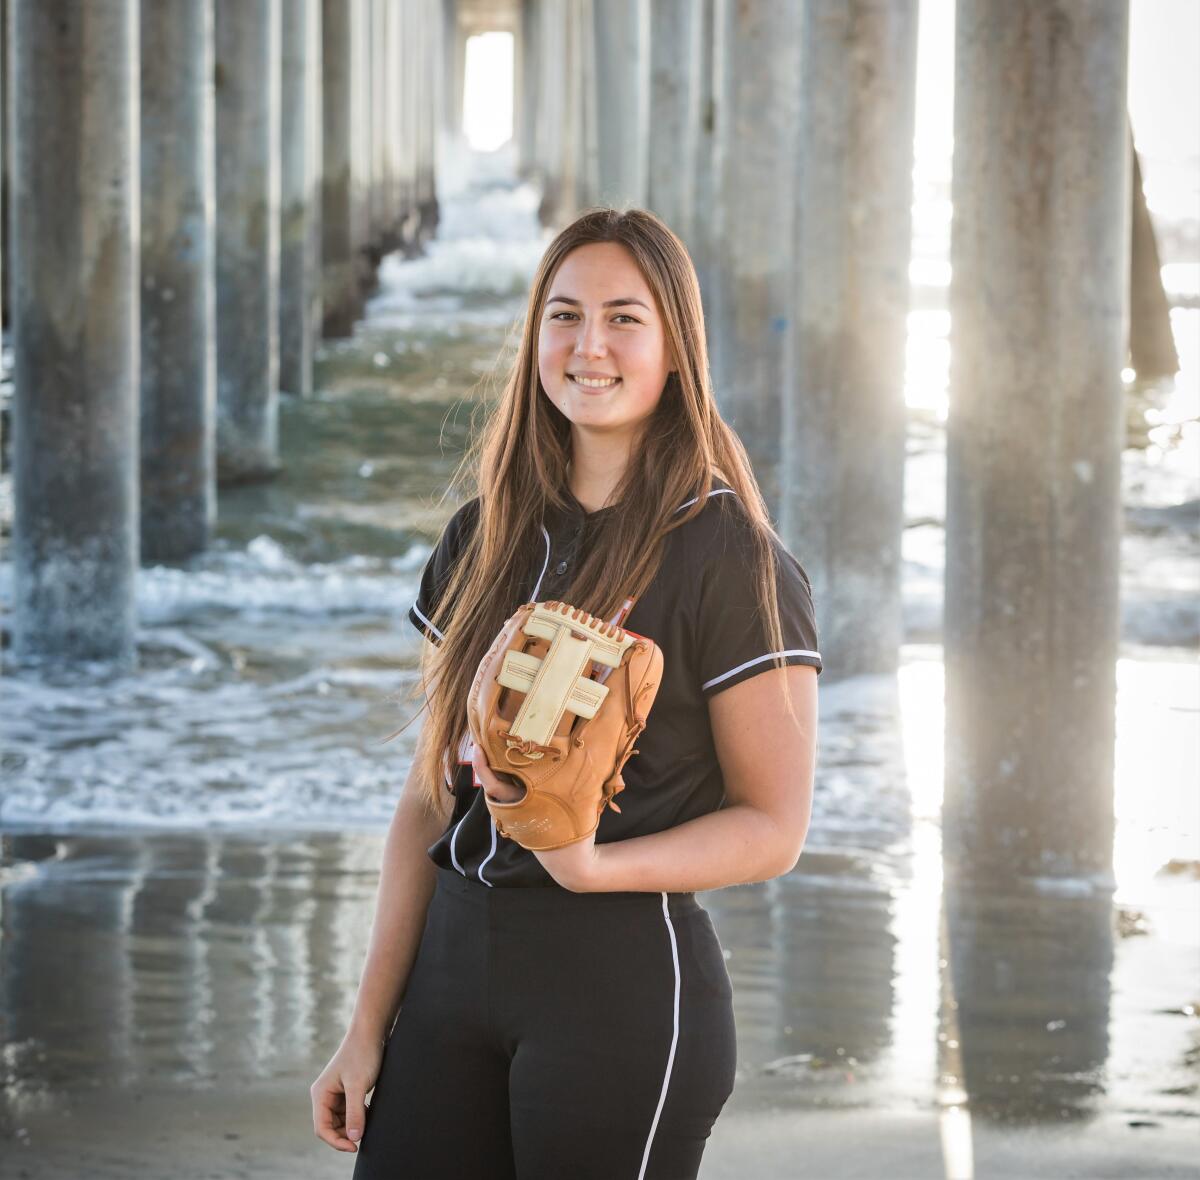 Huntington Beach High softball pitcher Zoe Prystajko poses for a photo at the pier.